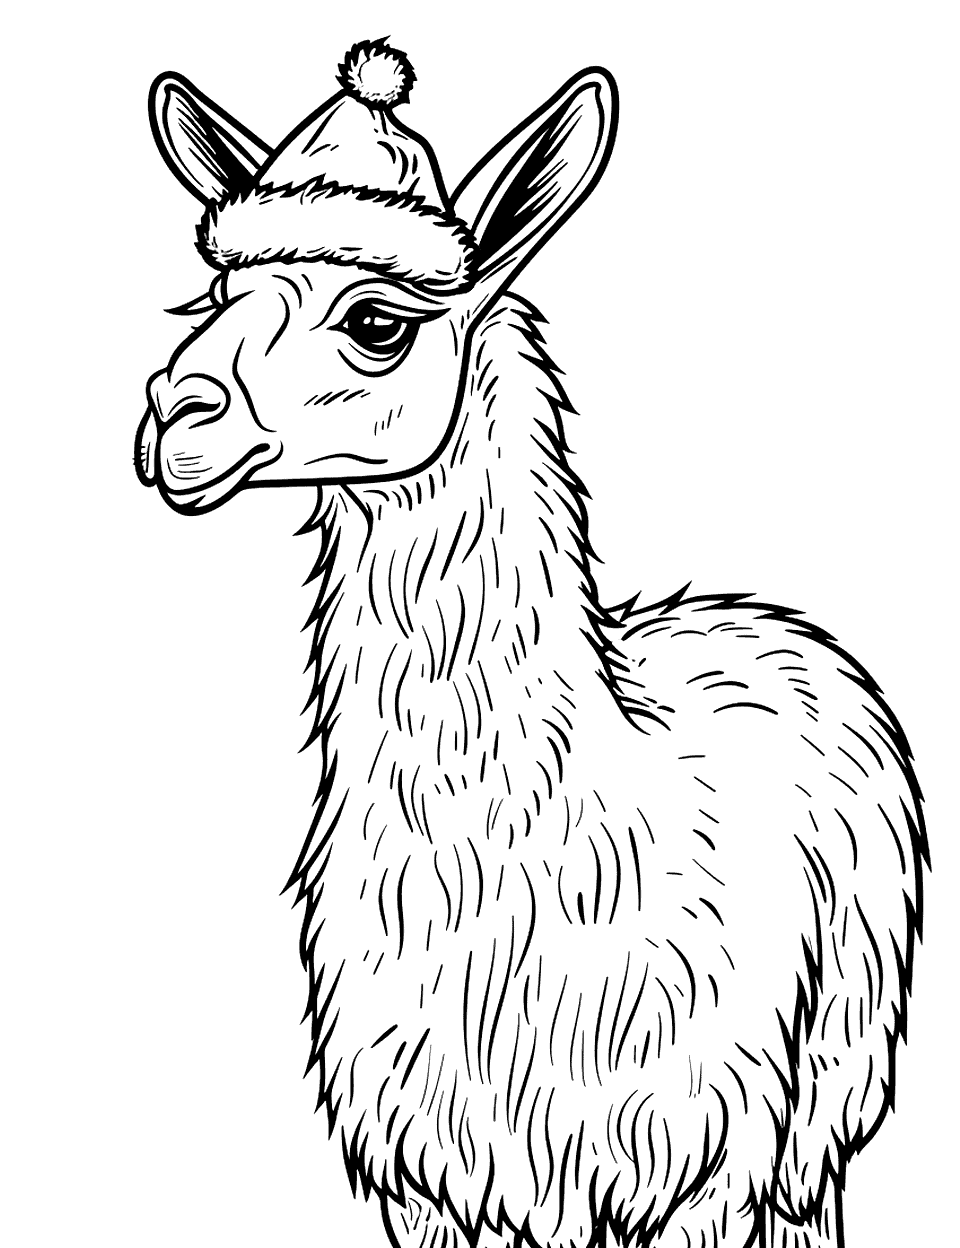 Llama in a Santa Hat Coloring Page - A festive llama wearing a Santa hat for the holidays.